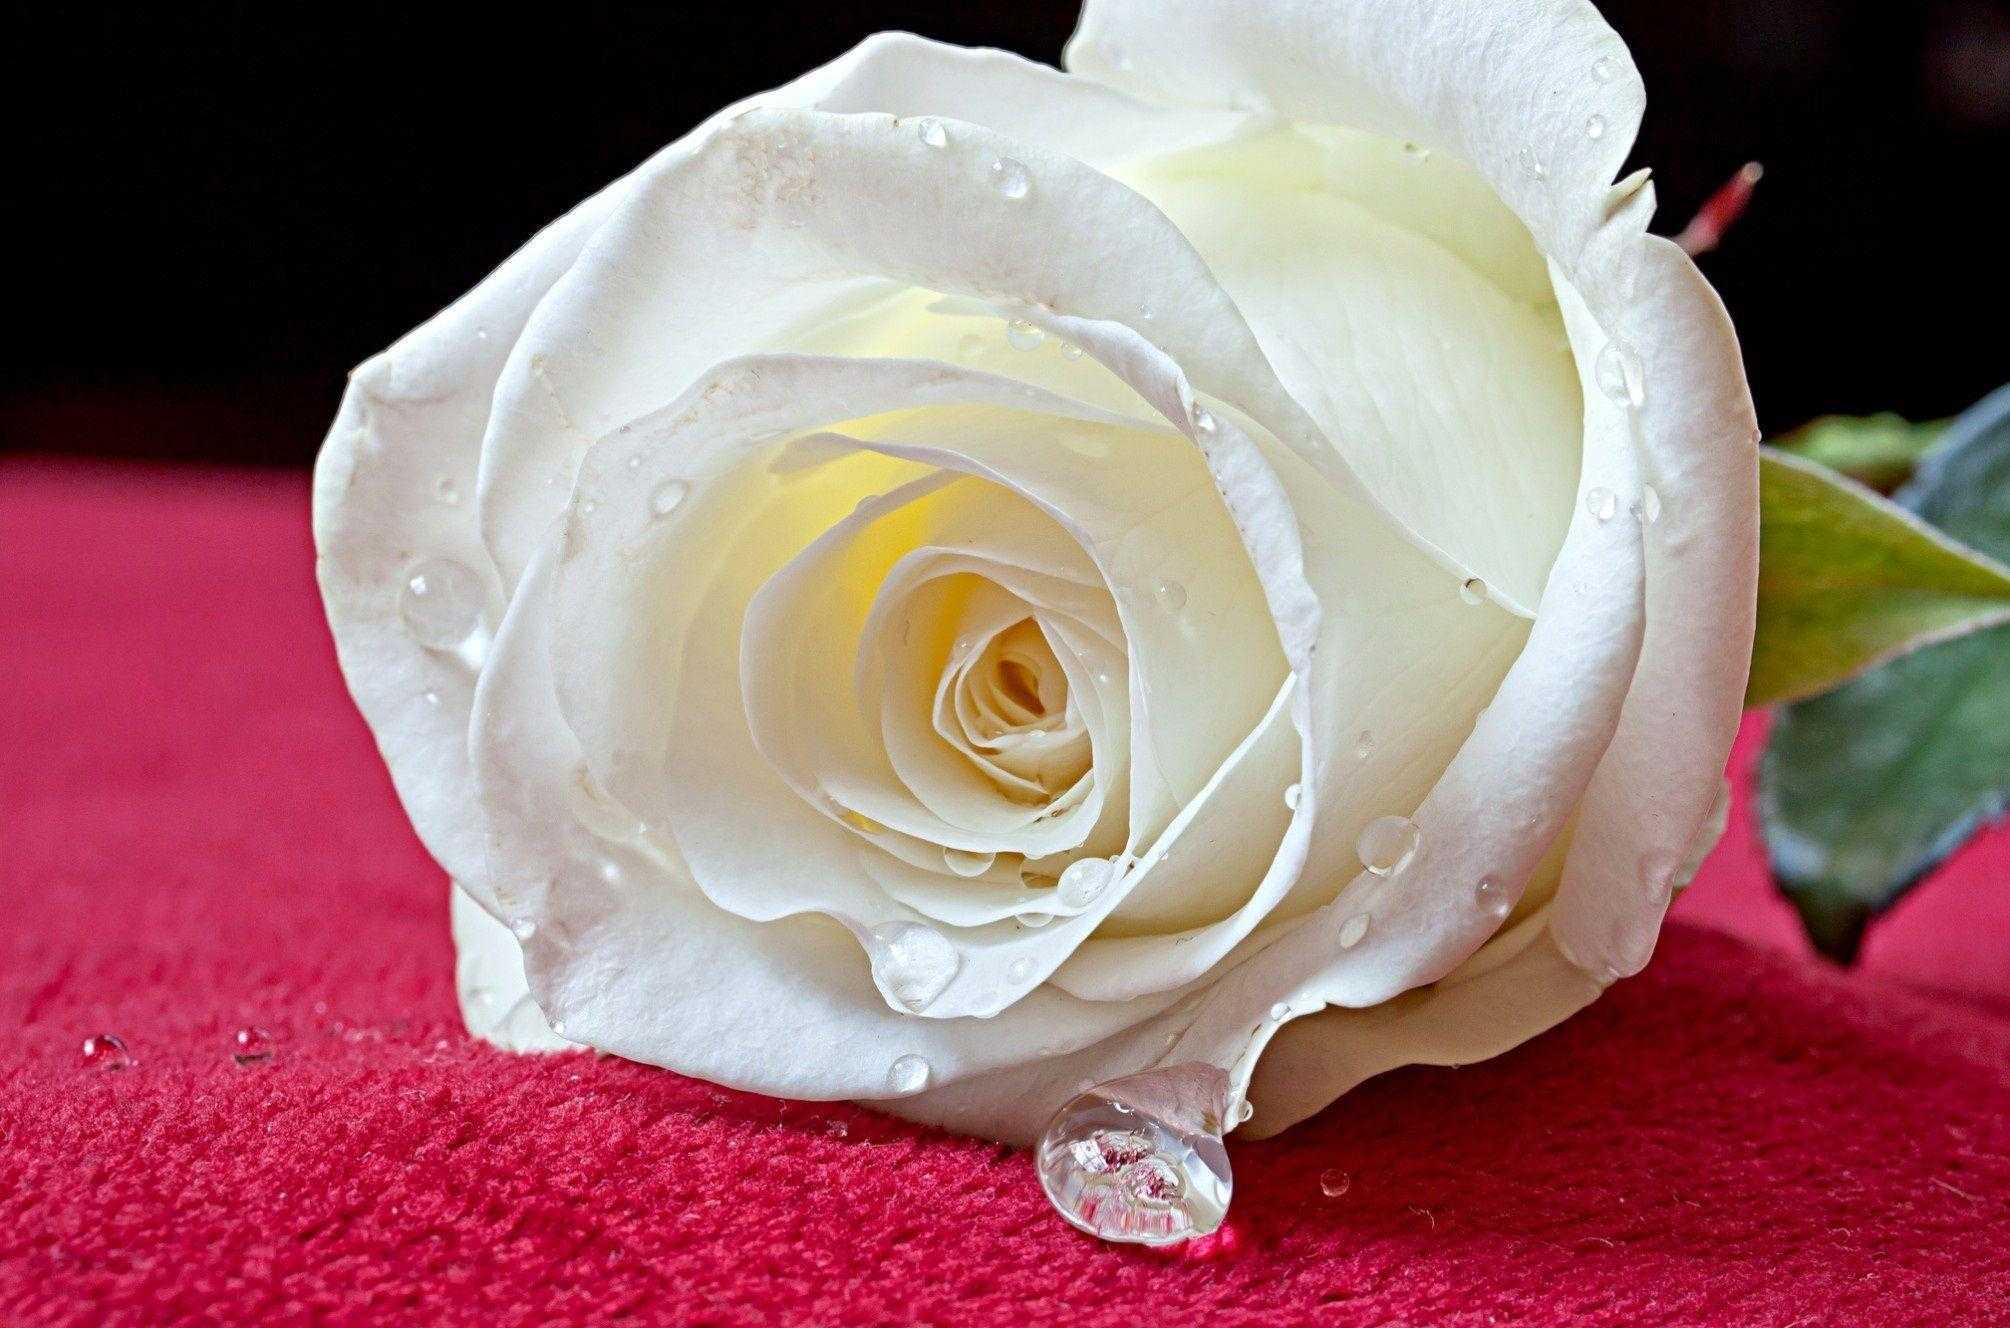 White Rose Hd Pics White Rose Hd Pics Wallpaper On - White Rose Images Free Download - HD Wallpaper 